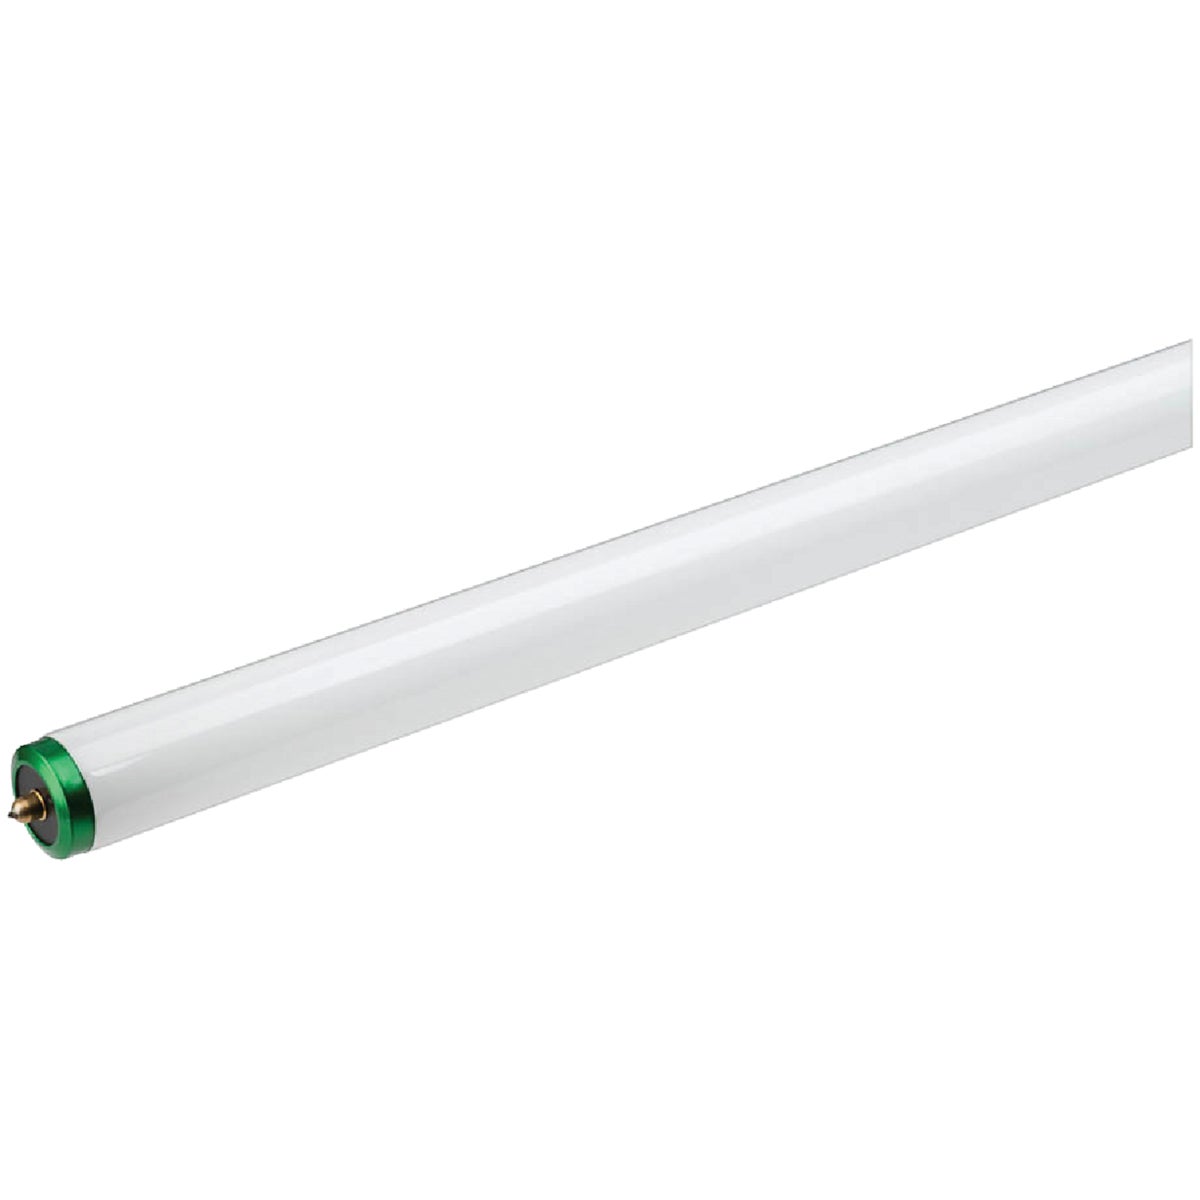 Item 501756, T12, single pin fluorescent tube.